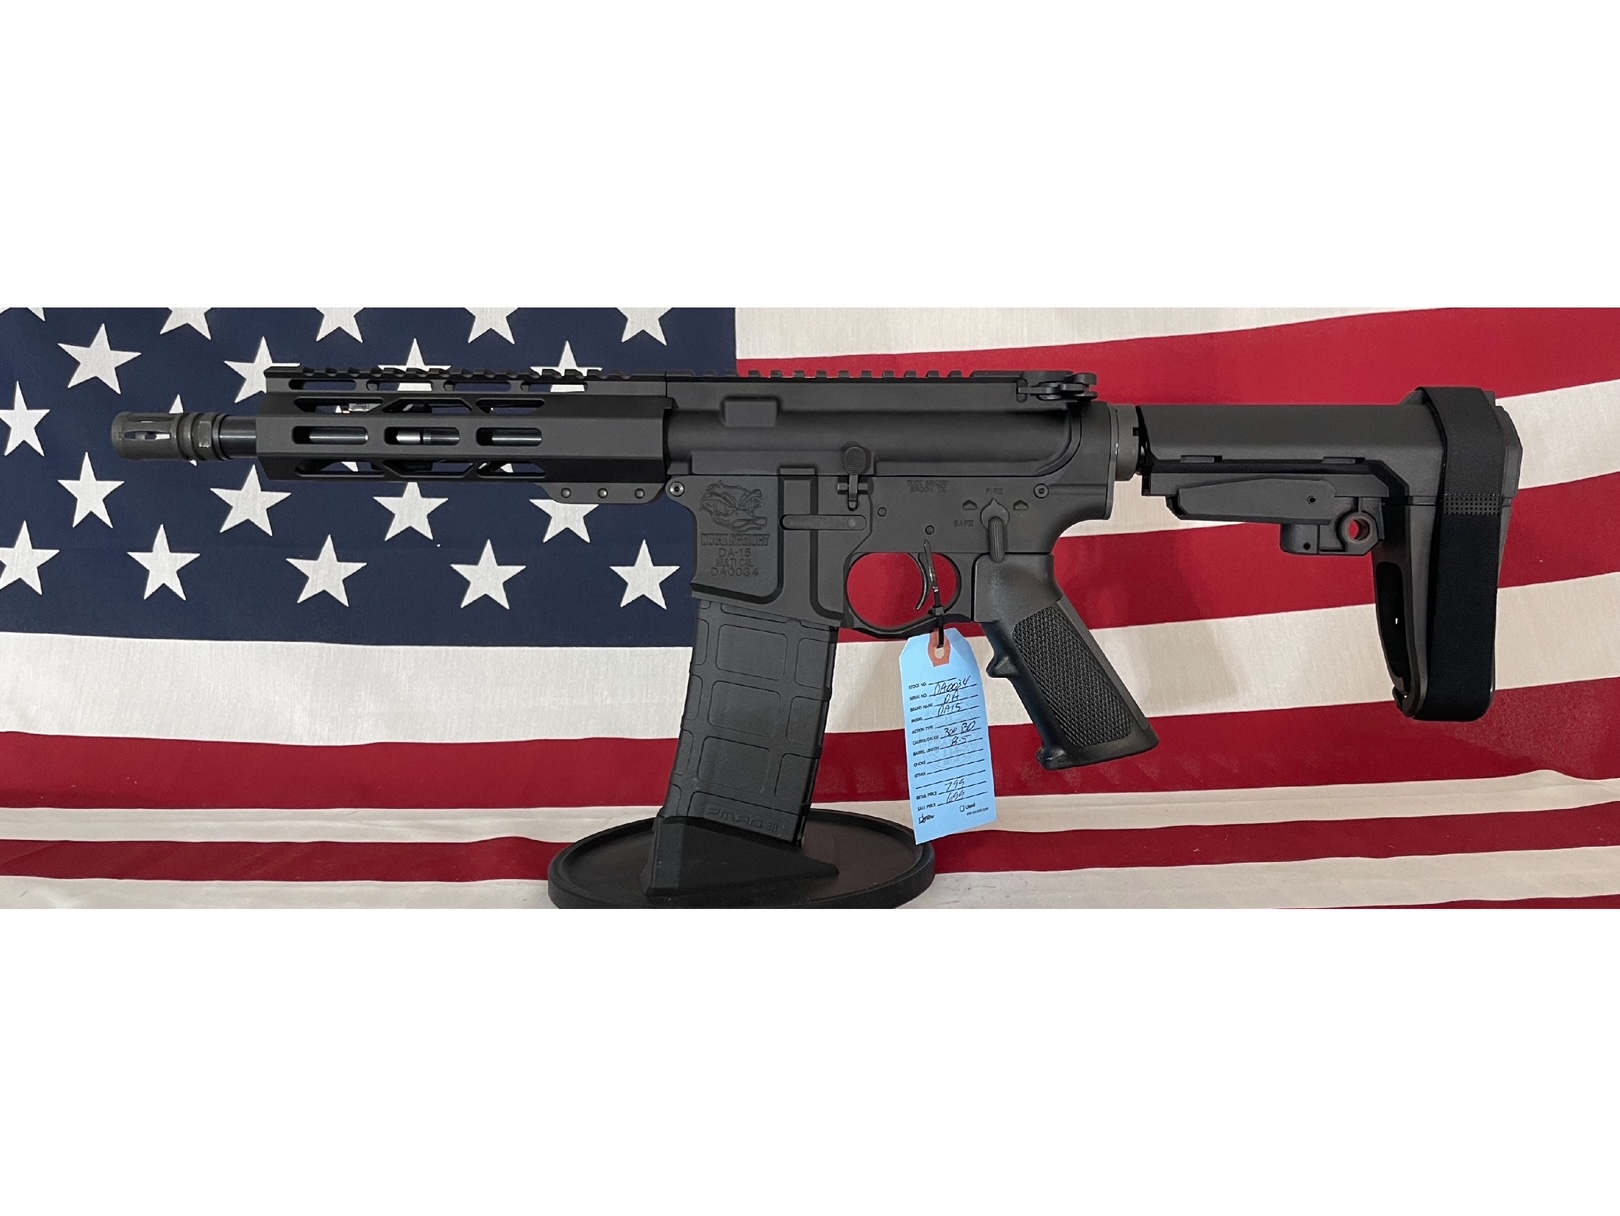 AR-15 Pistol 7.62x39 RANGER Series